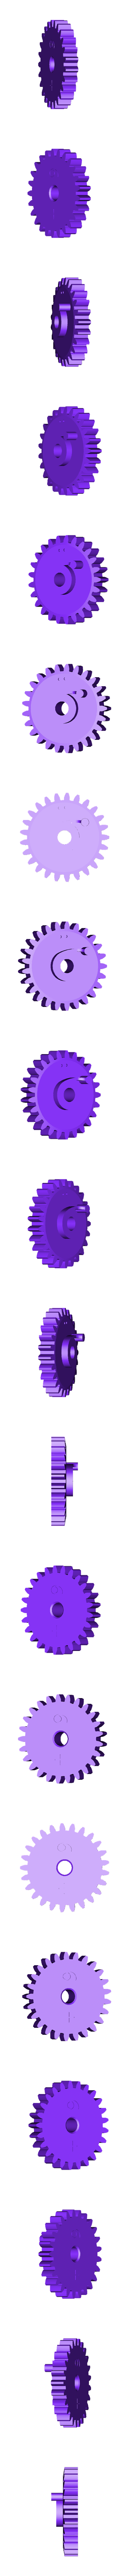 Gear6A.stl Download STL file 7-Segments • 3D printing design, fhuable